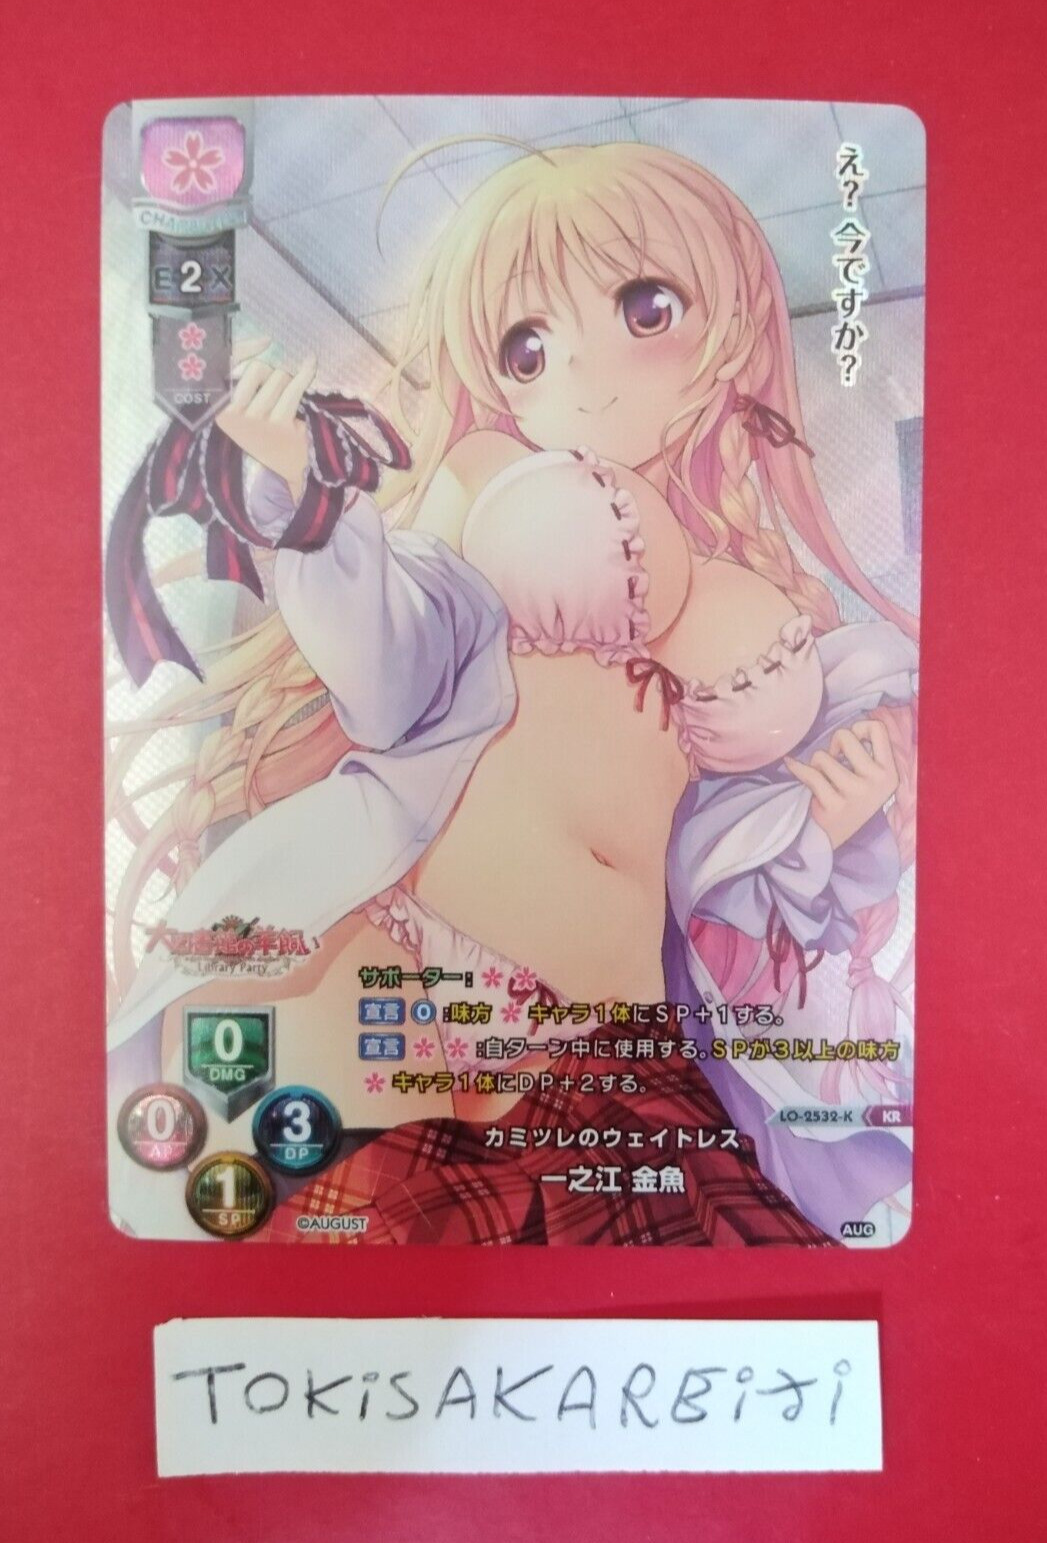 Lycee Overture Ichinoe Kingyo LO-2532-K KR Holo Card Daitoshokan August Anime